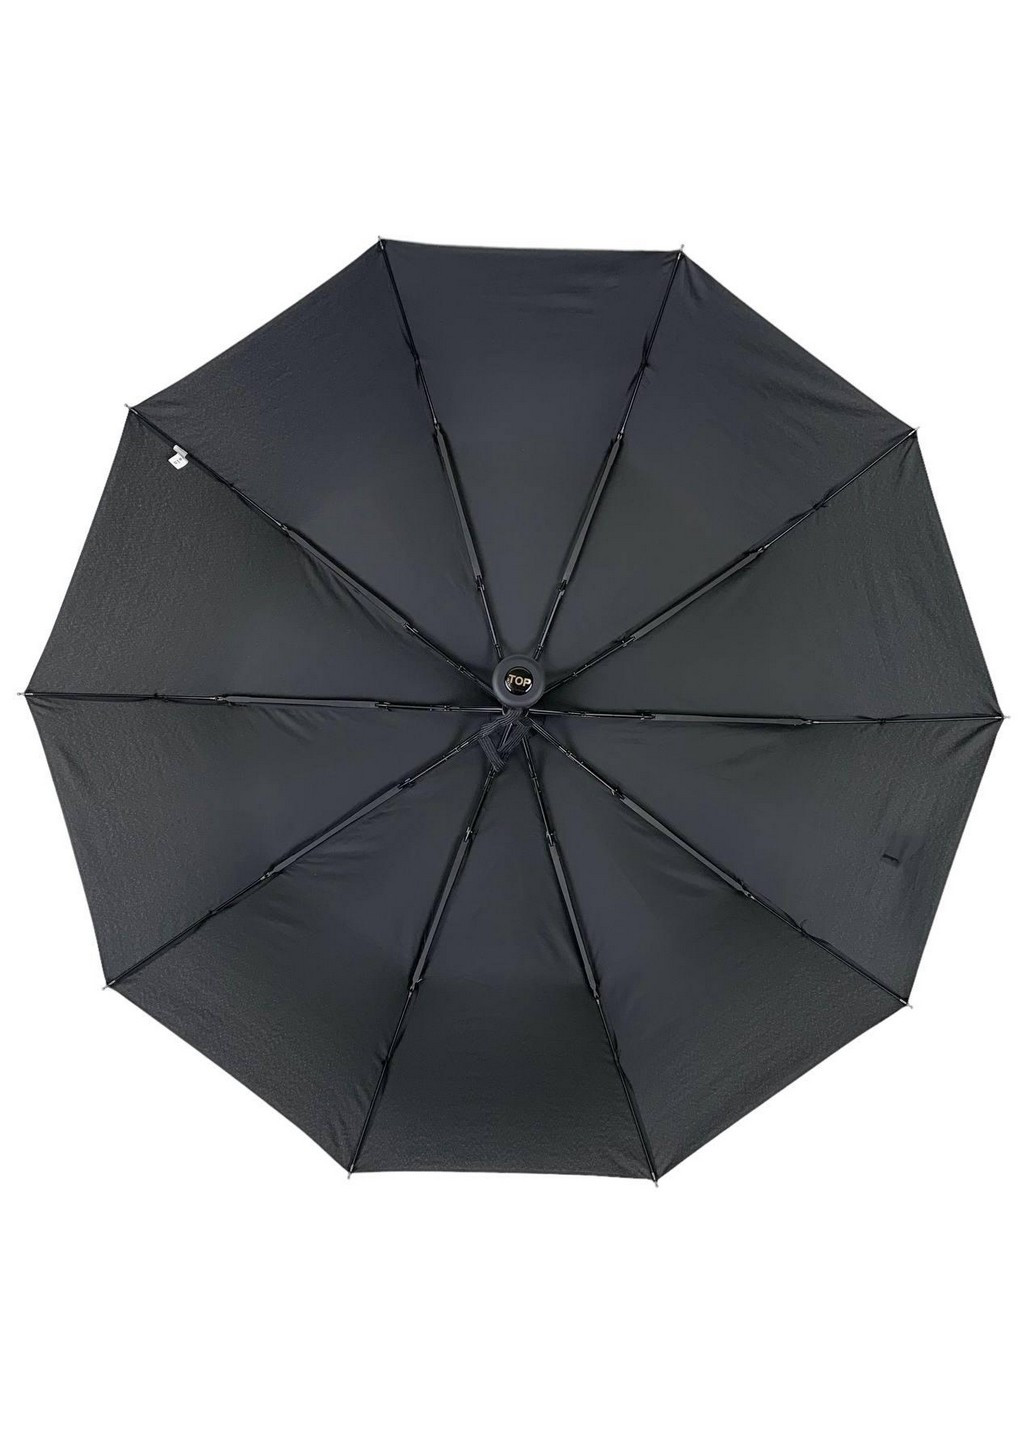 Мужской зонт полуавтомат 98 см Toprain (258638227)